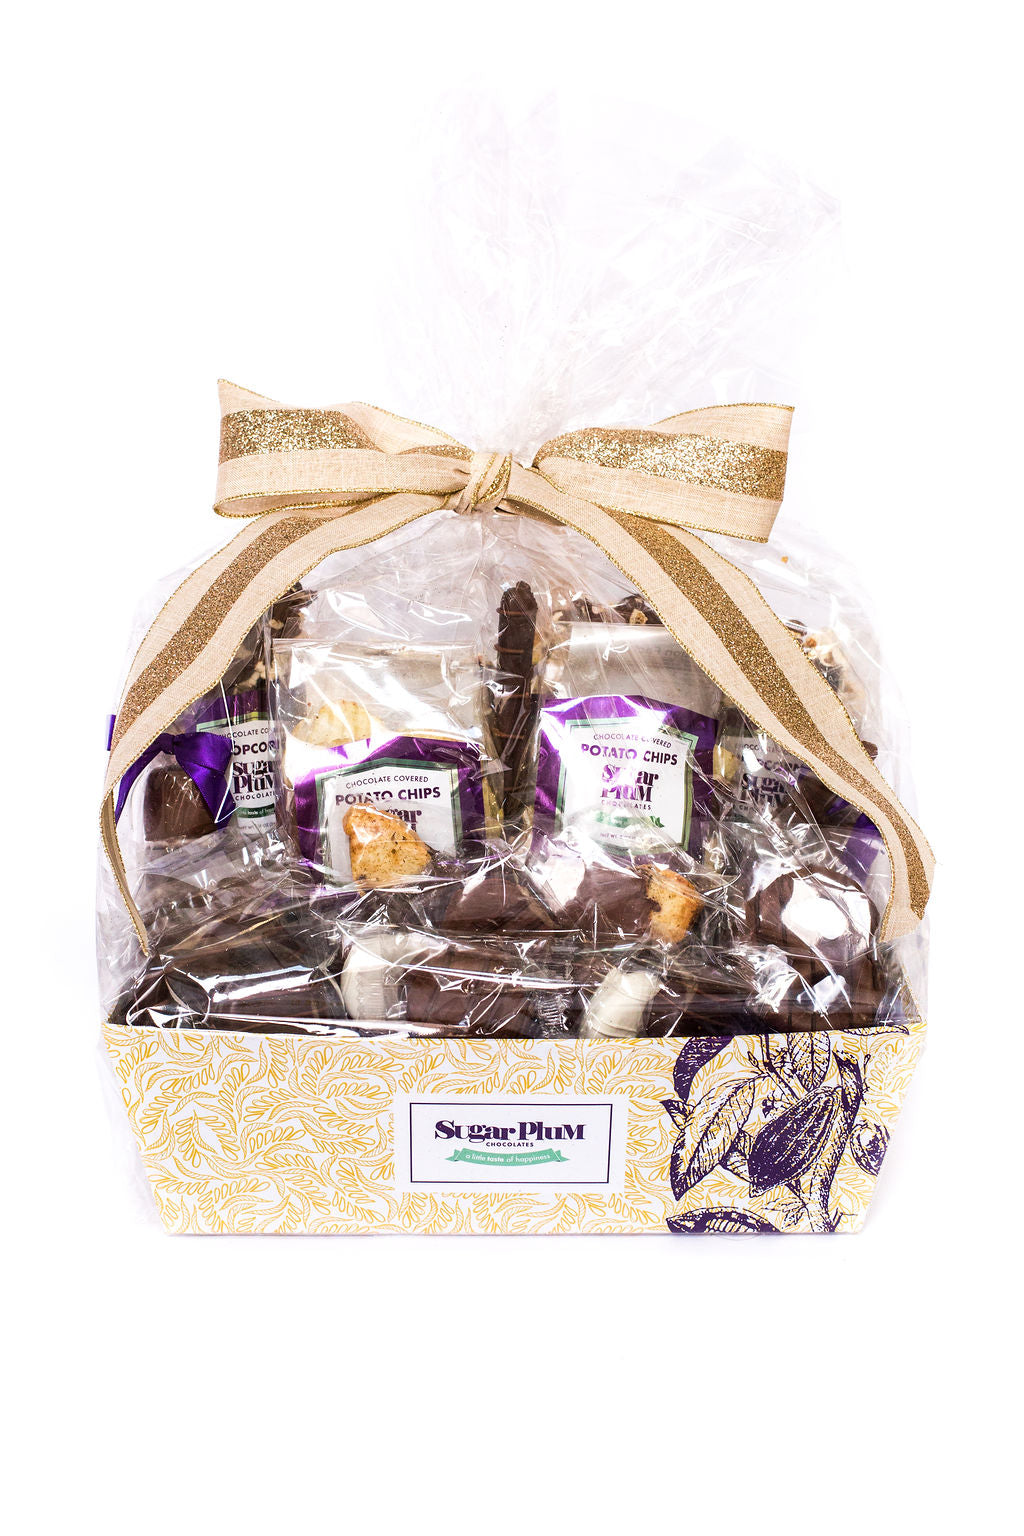 Chocolatier Sweets, Food Gift Baskets: Olive & Cocoa, LLC